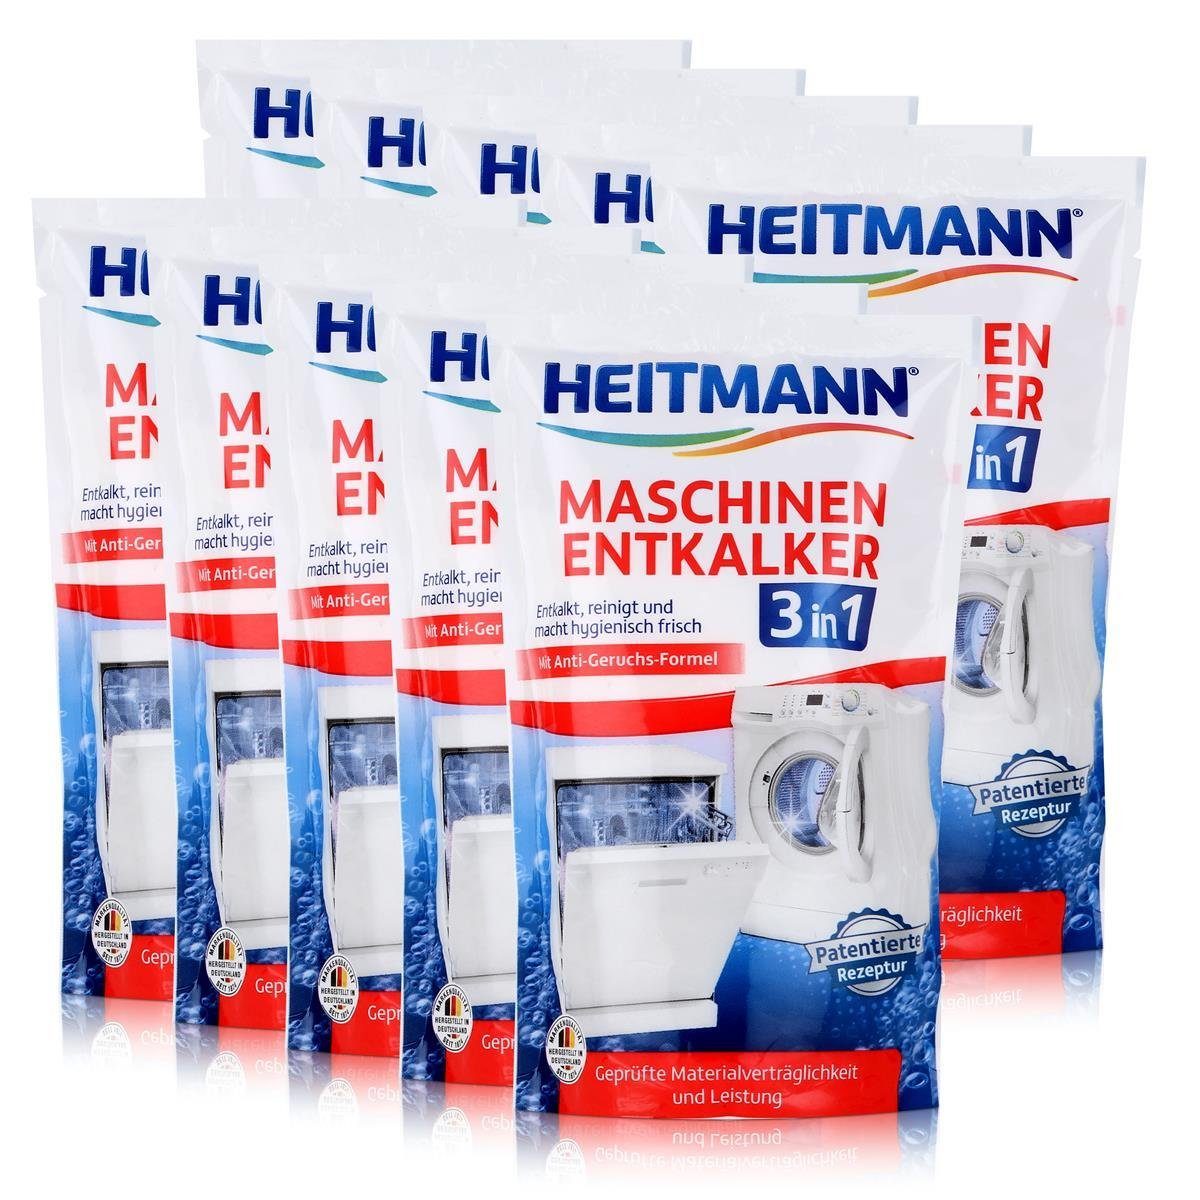 HEITMANN Heitmann Maschinen Entkalker 175g und -Waschmaschinen (Spezialwaschmittel Geschirrspüler